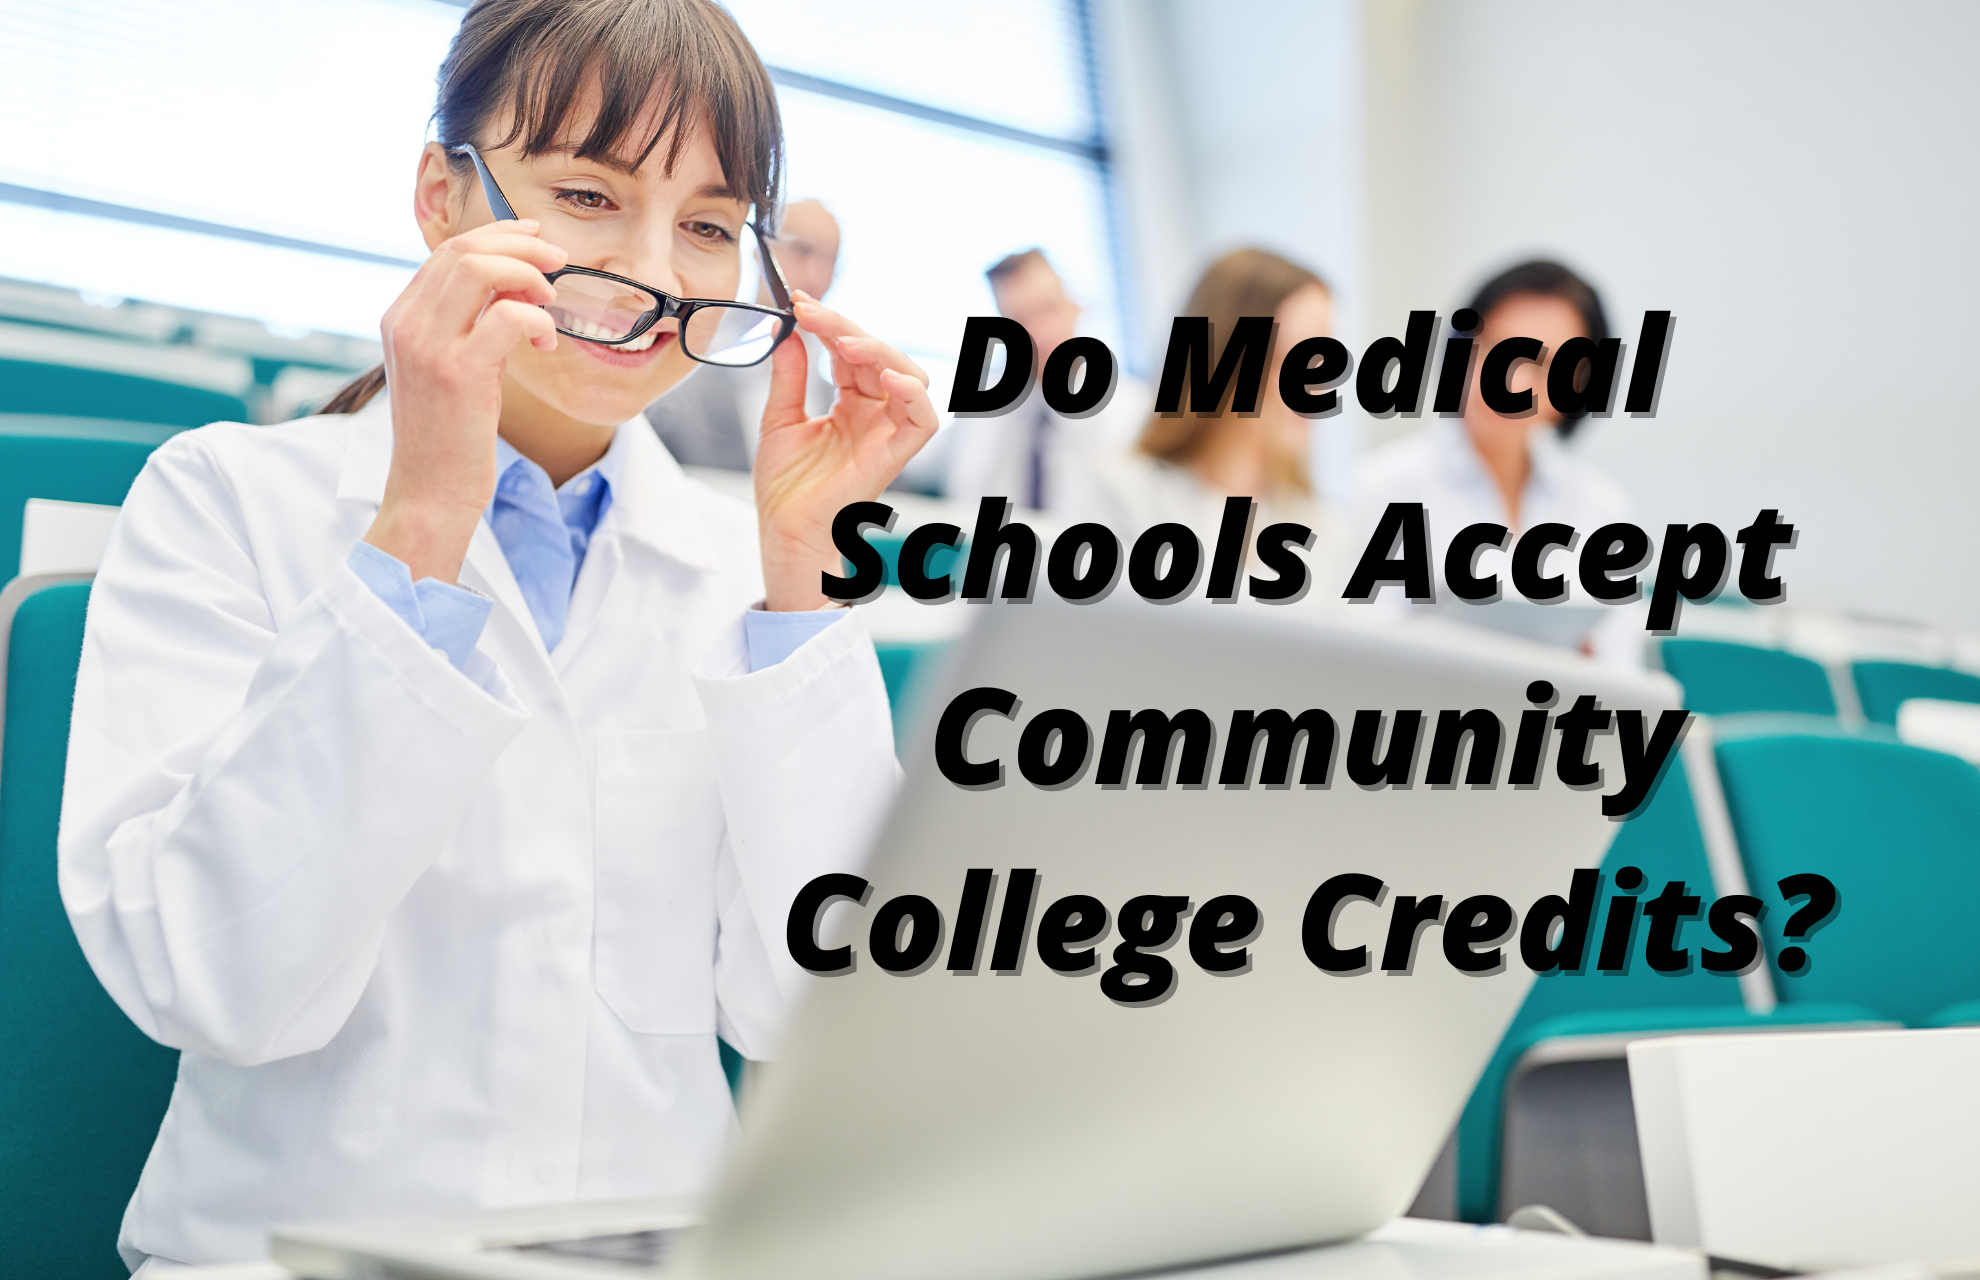 Do Medical Schools Accept Community College Credits?